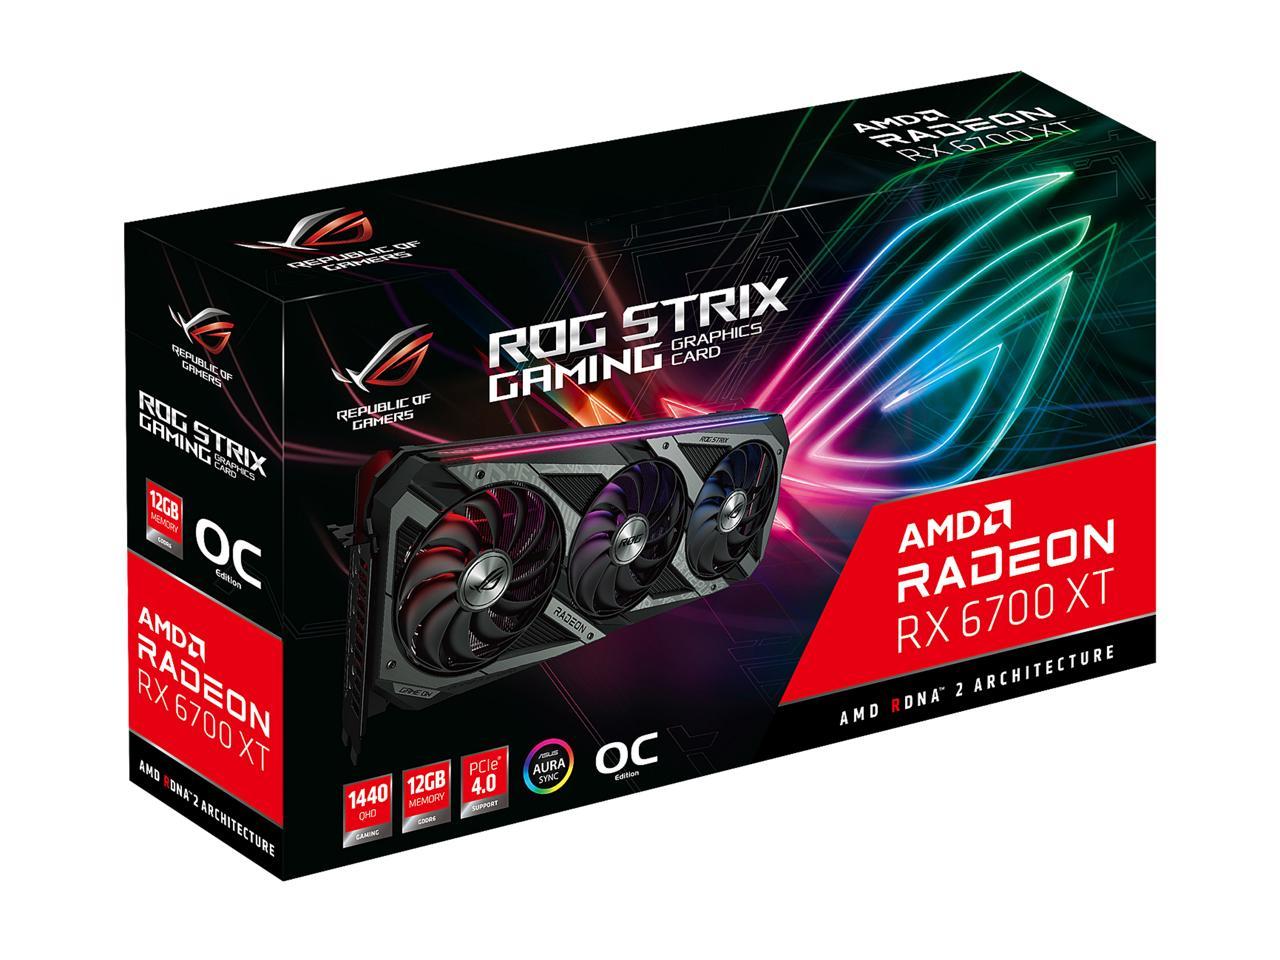 ASUS ROG STRIX Radeon RX 6700 XT OC Edition Gaming Graphics Card (AMD RDNA  2, PCIe 4.0, 12GB GDDR6, HDMI 2.1, DisplayPort 1.4a, Axial-tech Fan Design,  